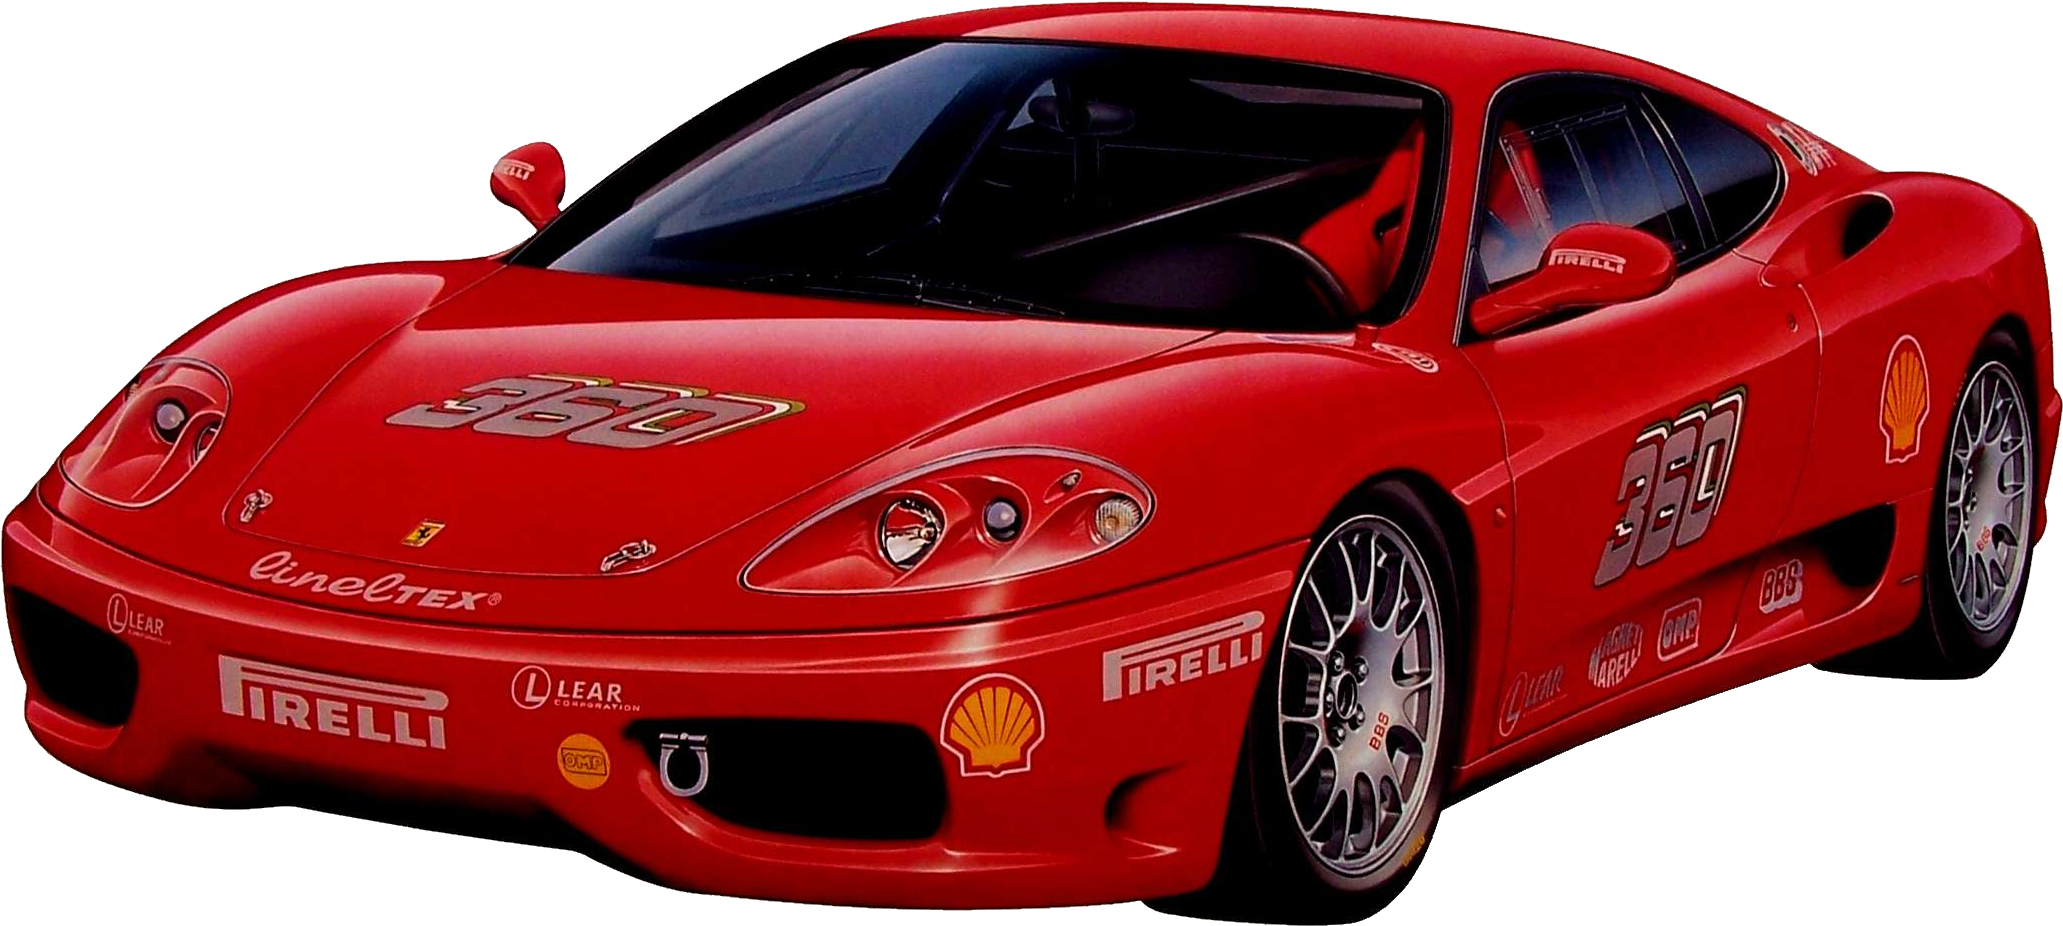 Ferrari PNG images free download